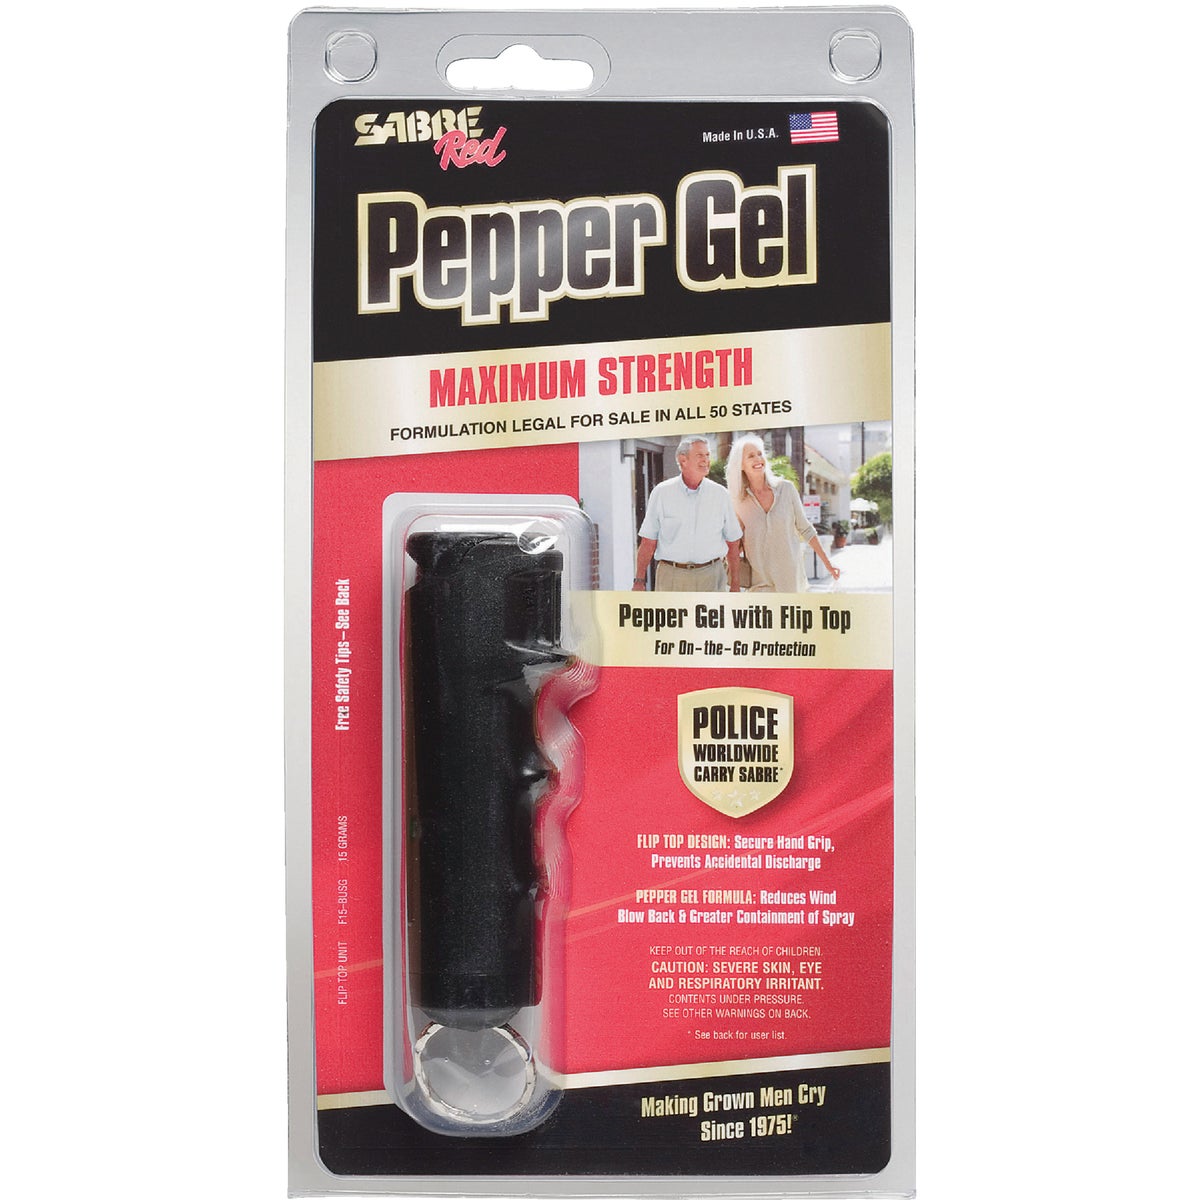 Item 800863, Maximum strength pepper gel.